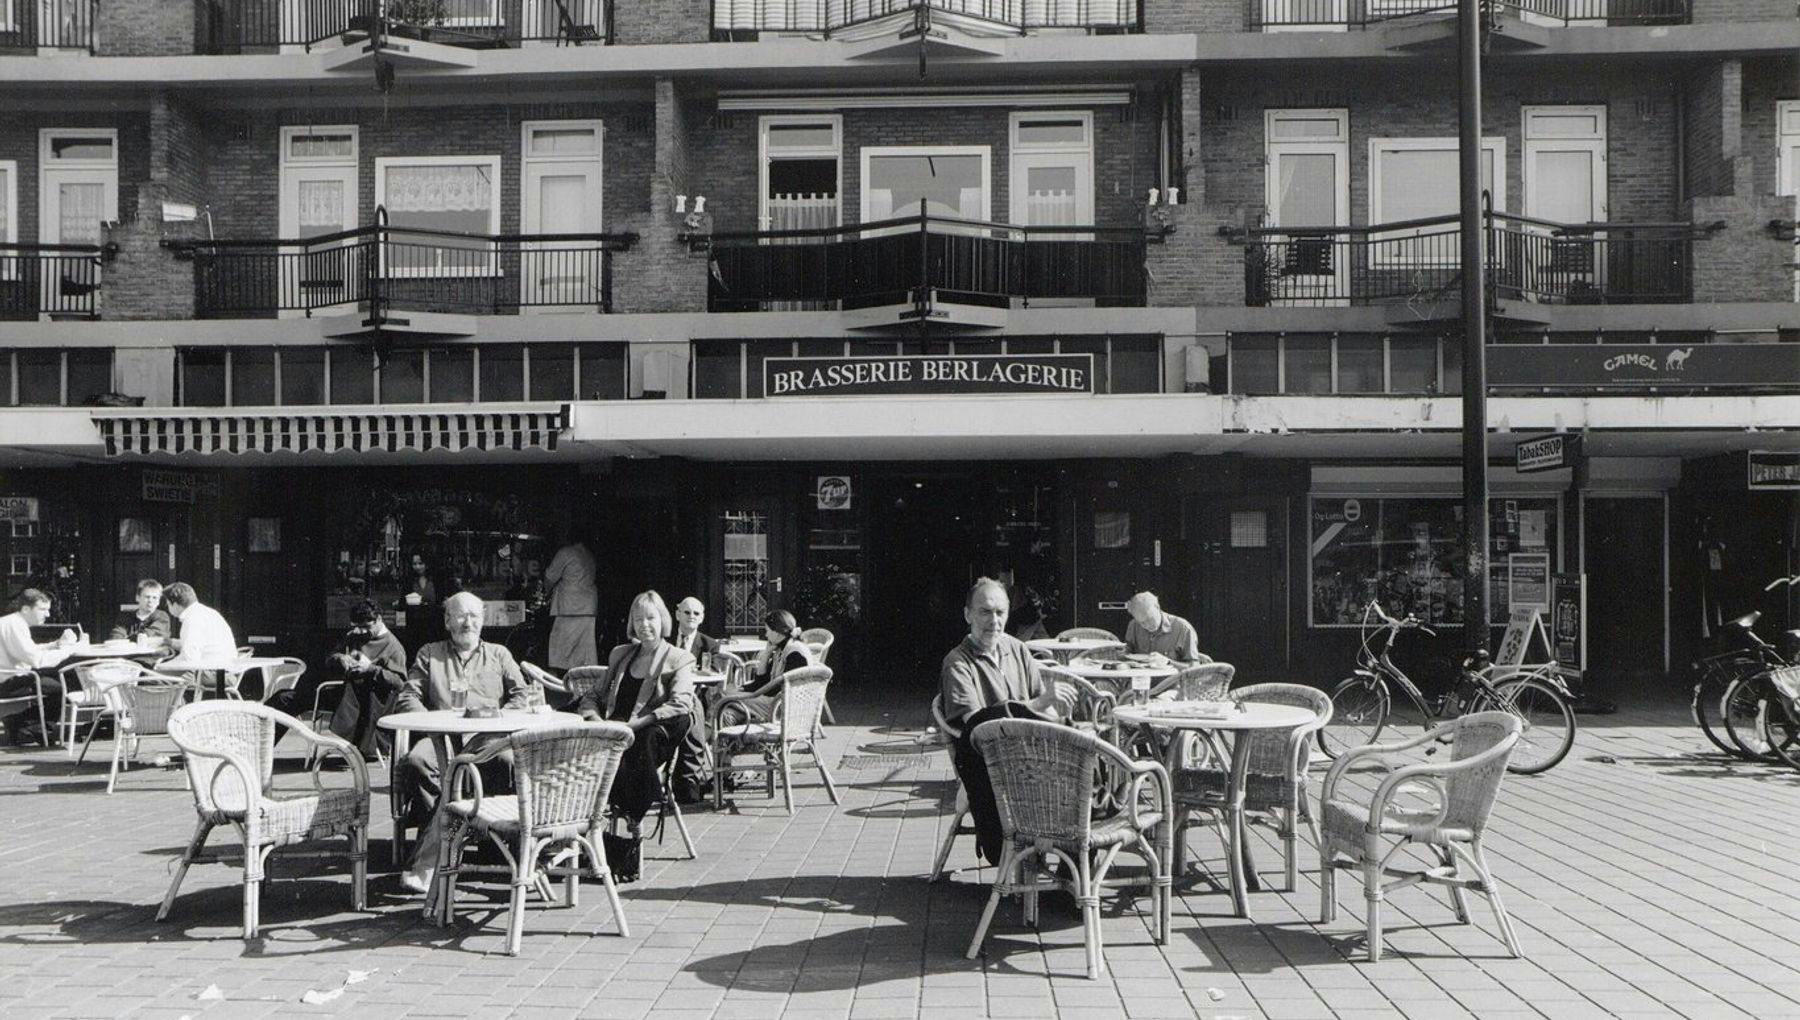 Sitting on terrace at Mercatorplein archive photo